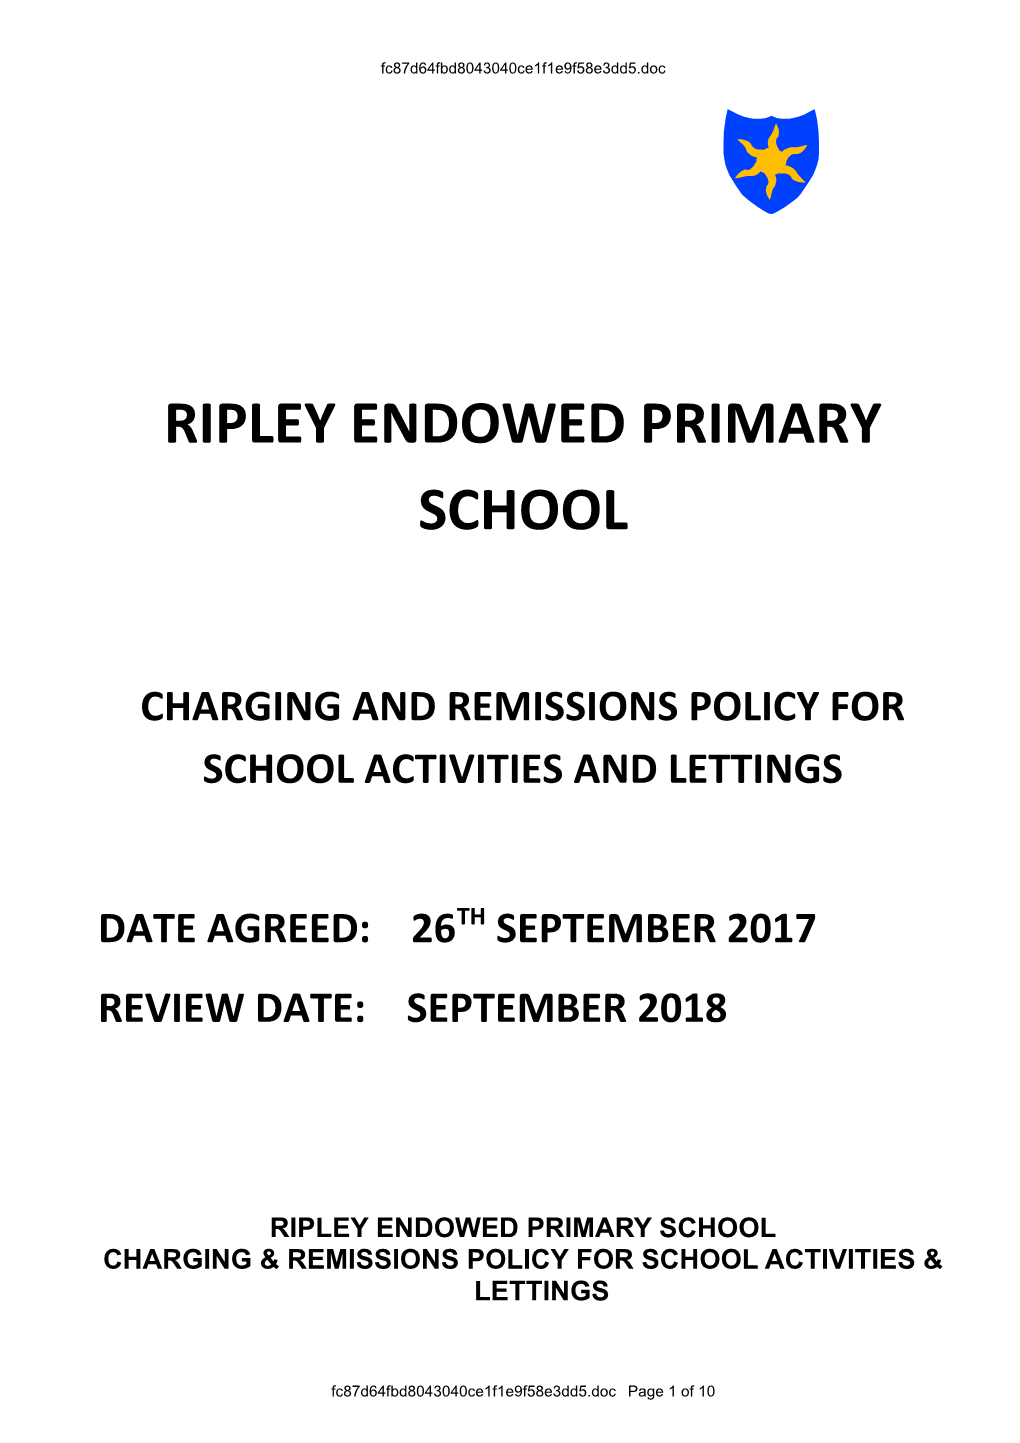 Ripley Endowed Primary School